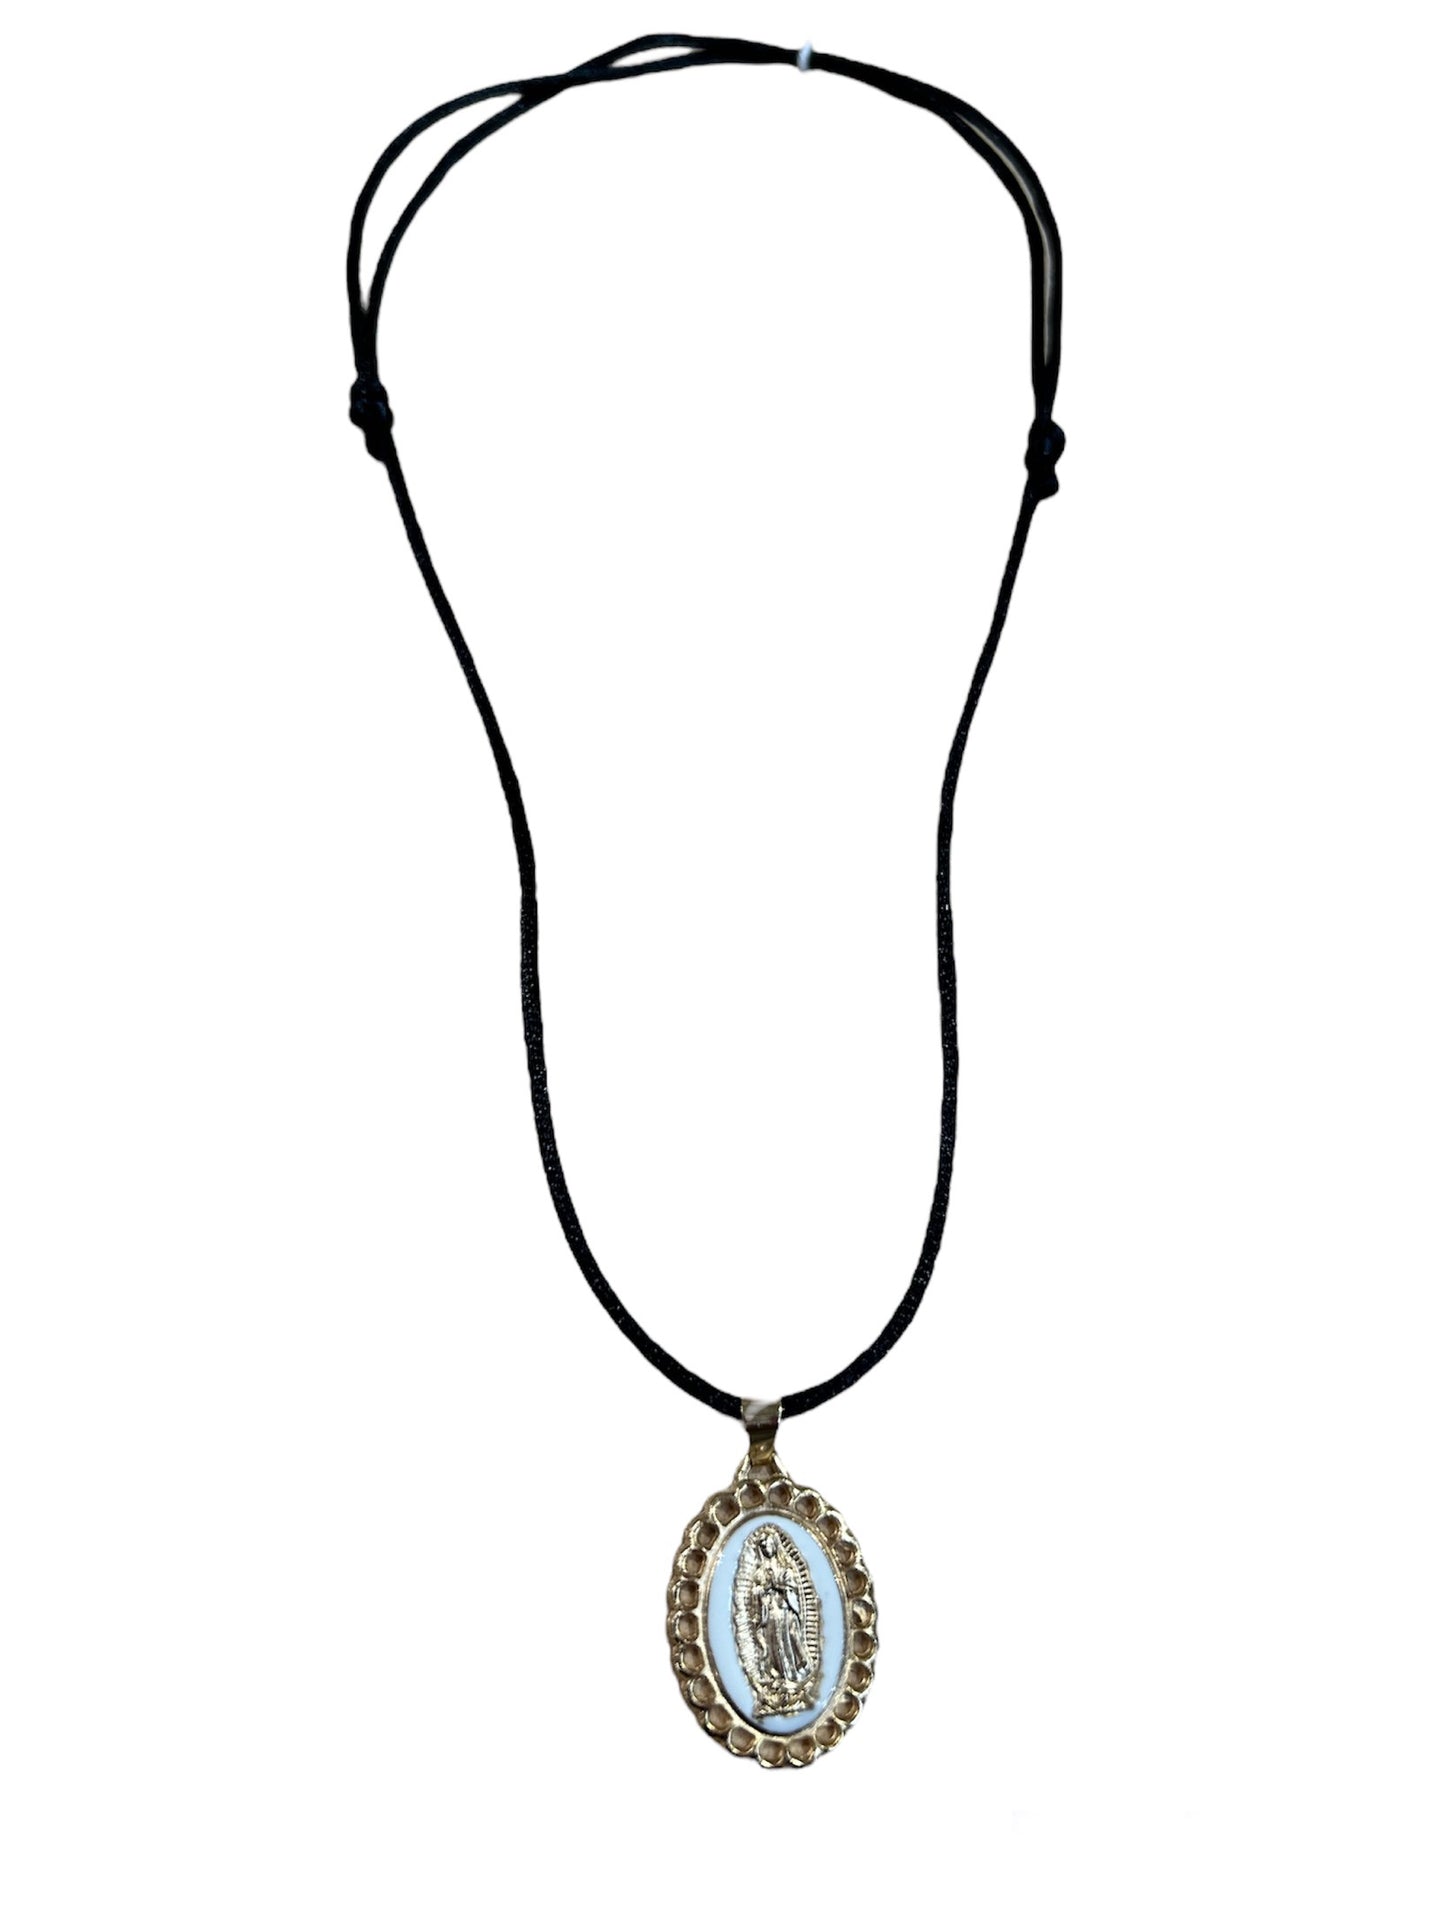 Medalla Virgen de Guadalupe con hilo